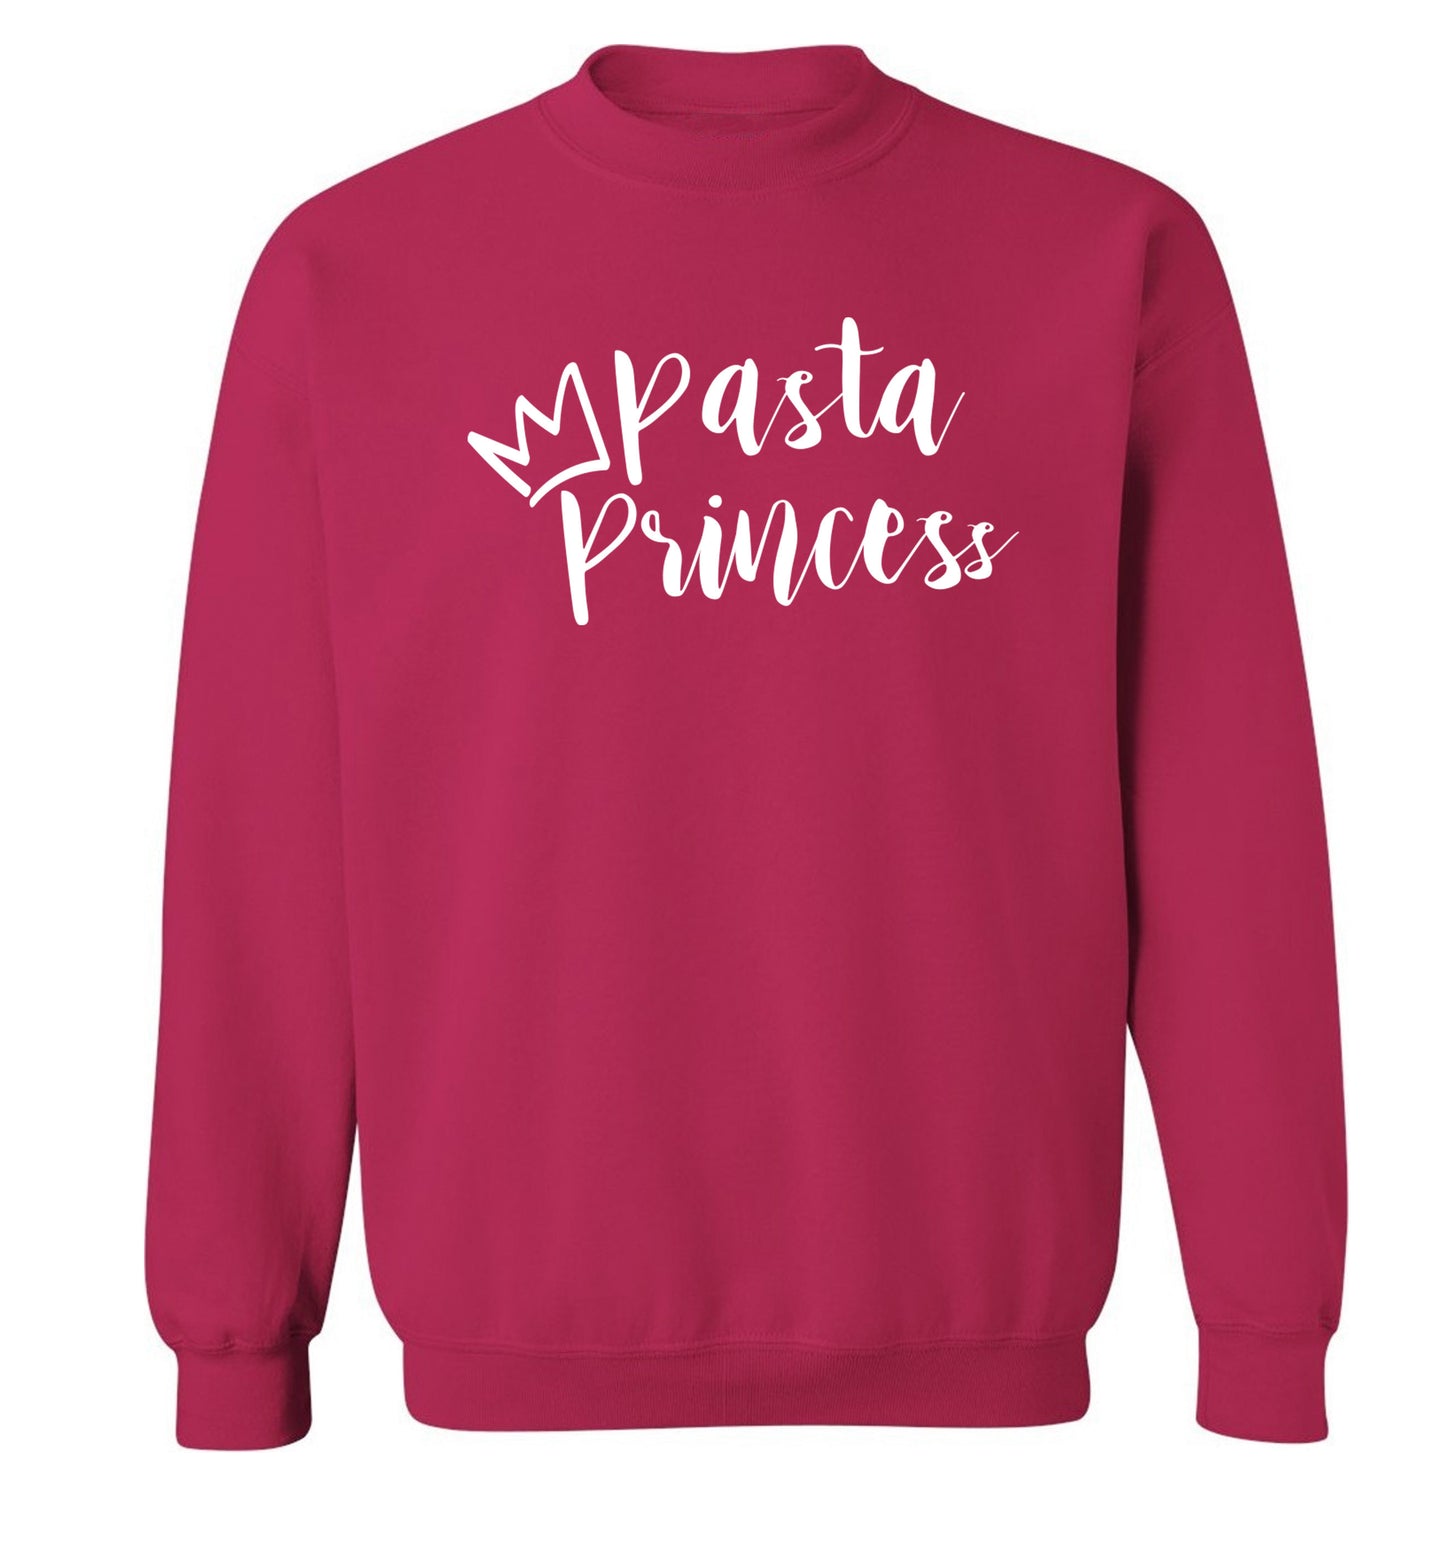 Pasta Princess Adult's unisex pink Sweater XL